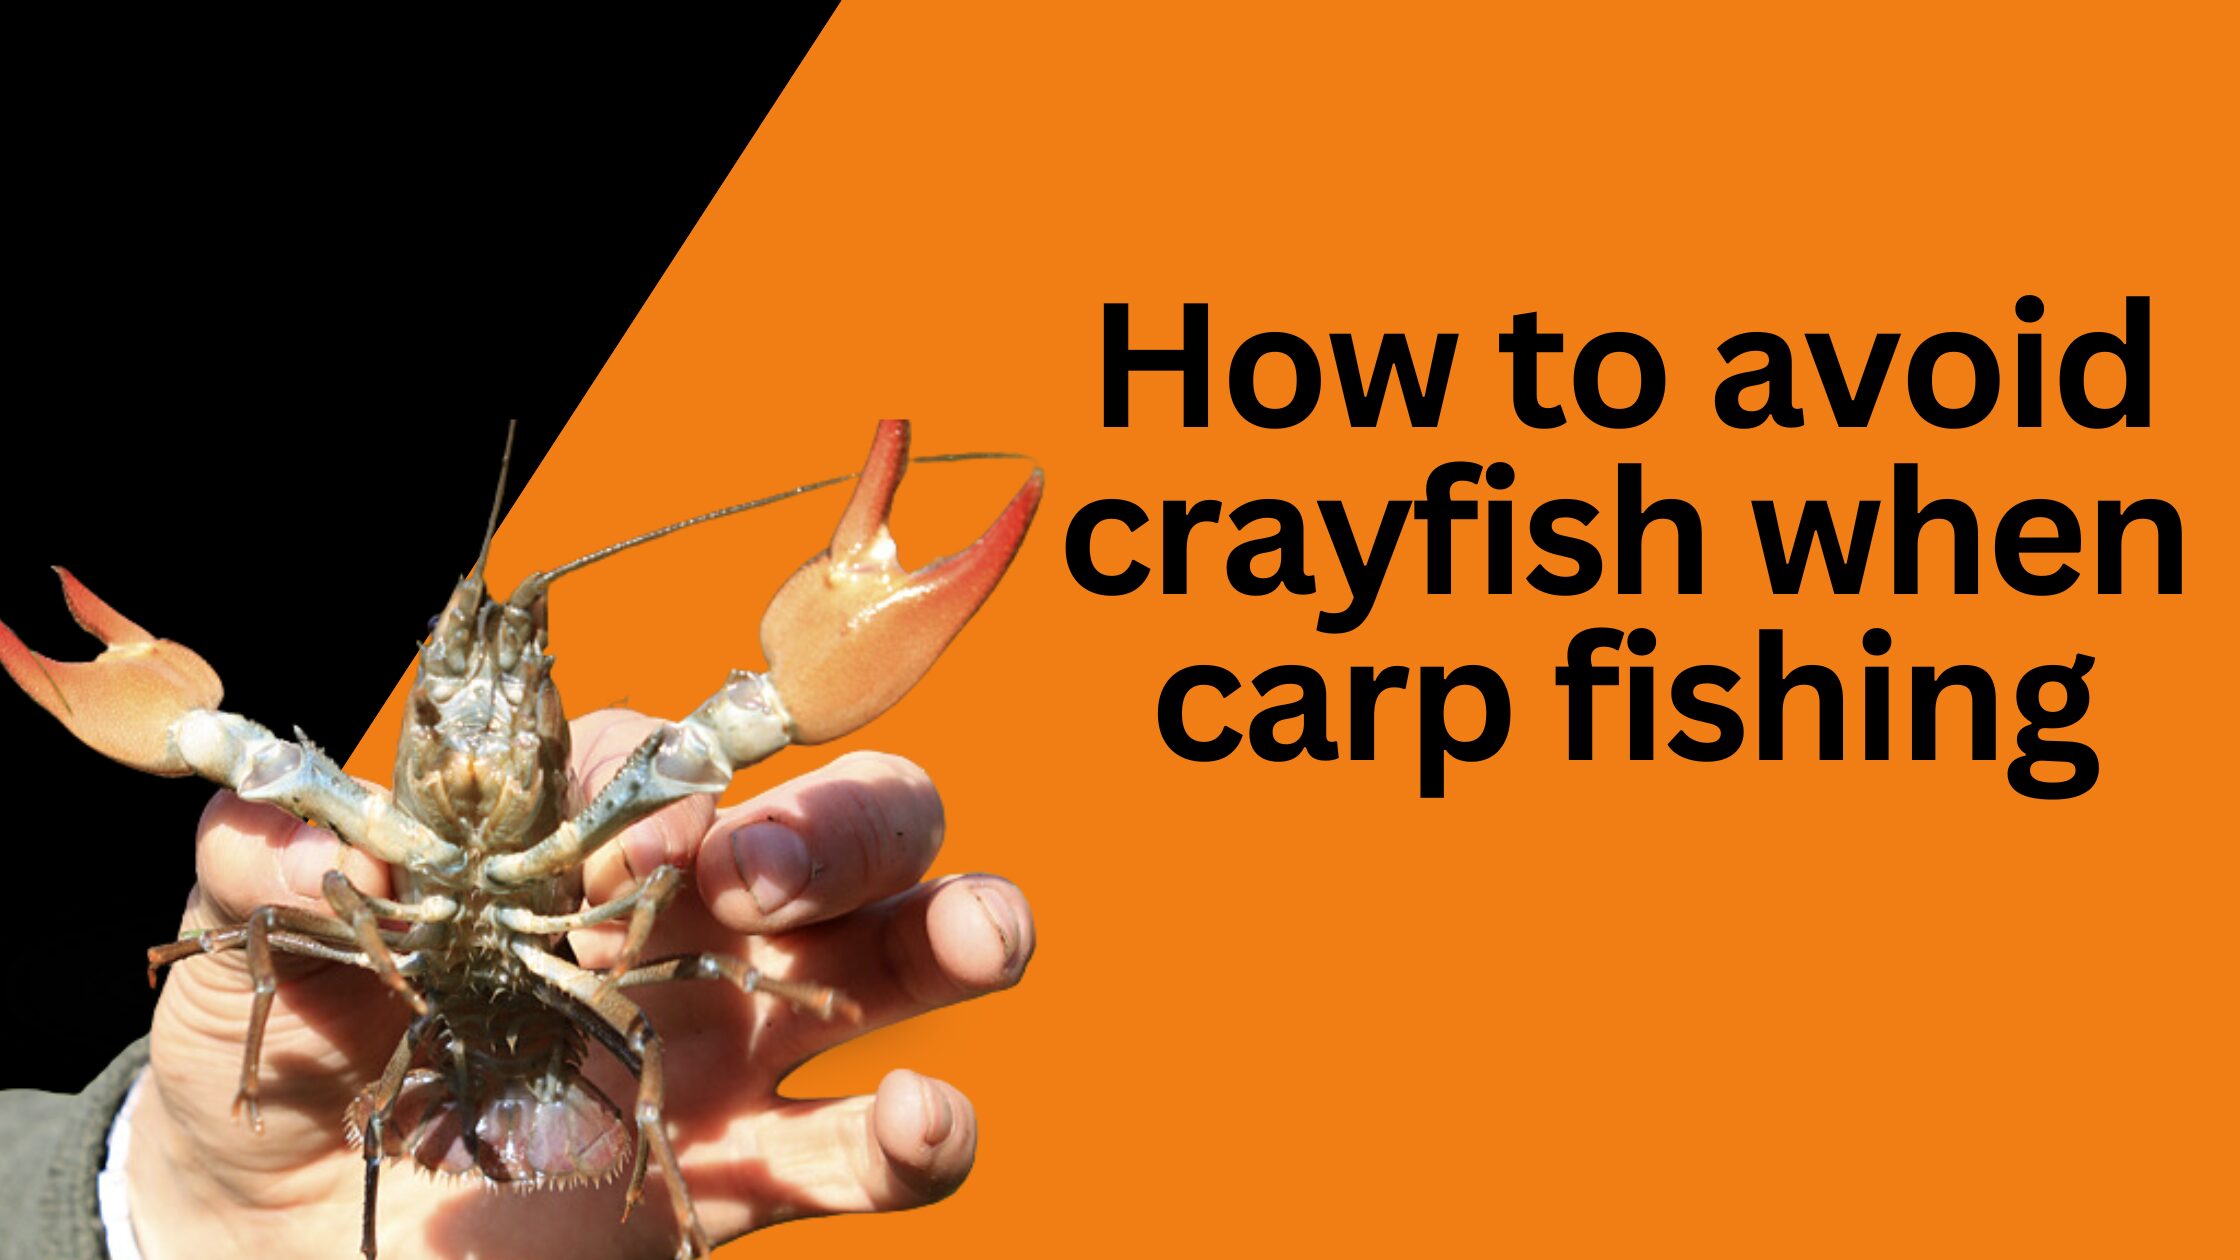 How to avoid crayfish when carp fishing